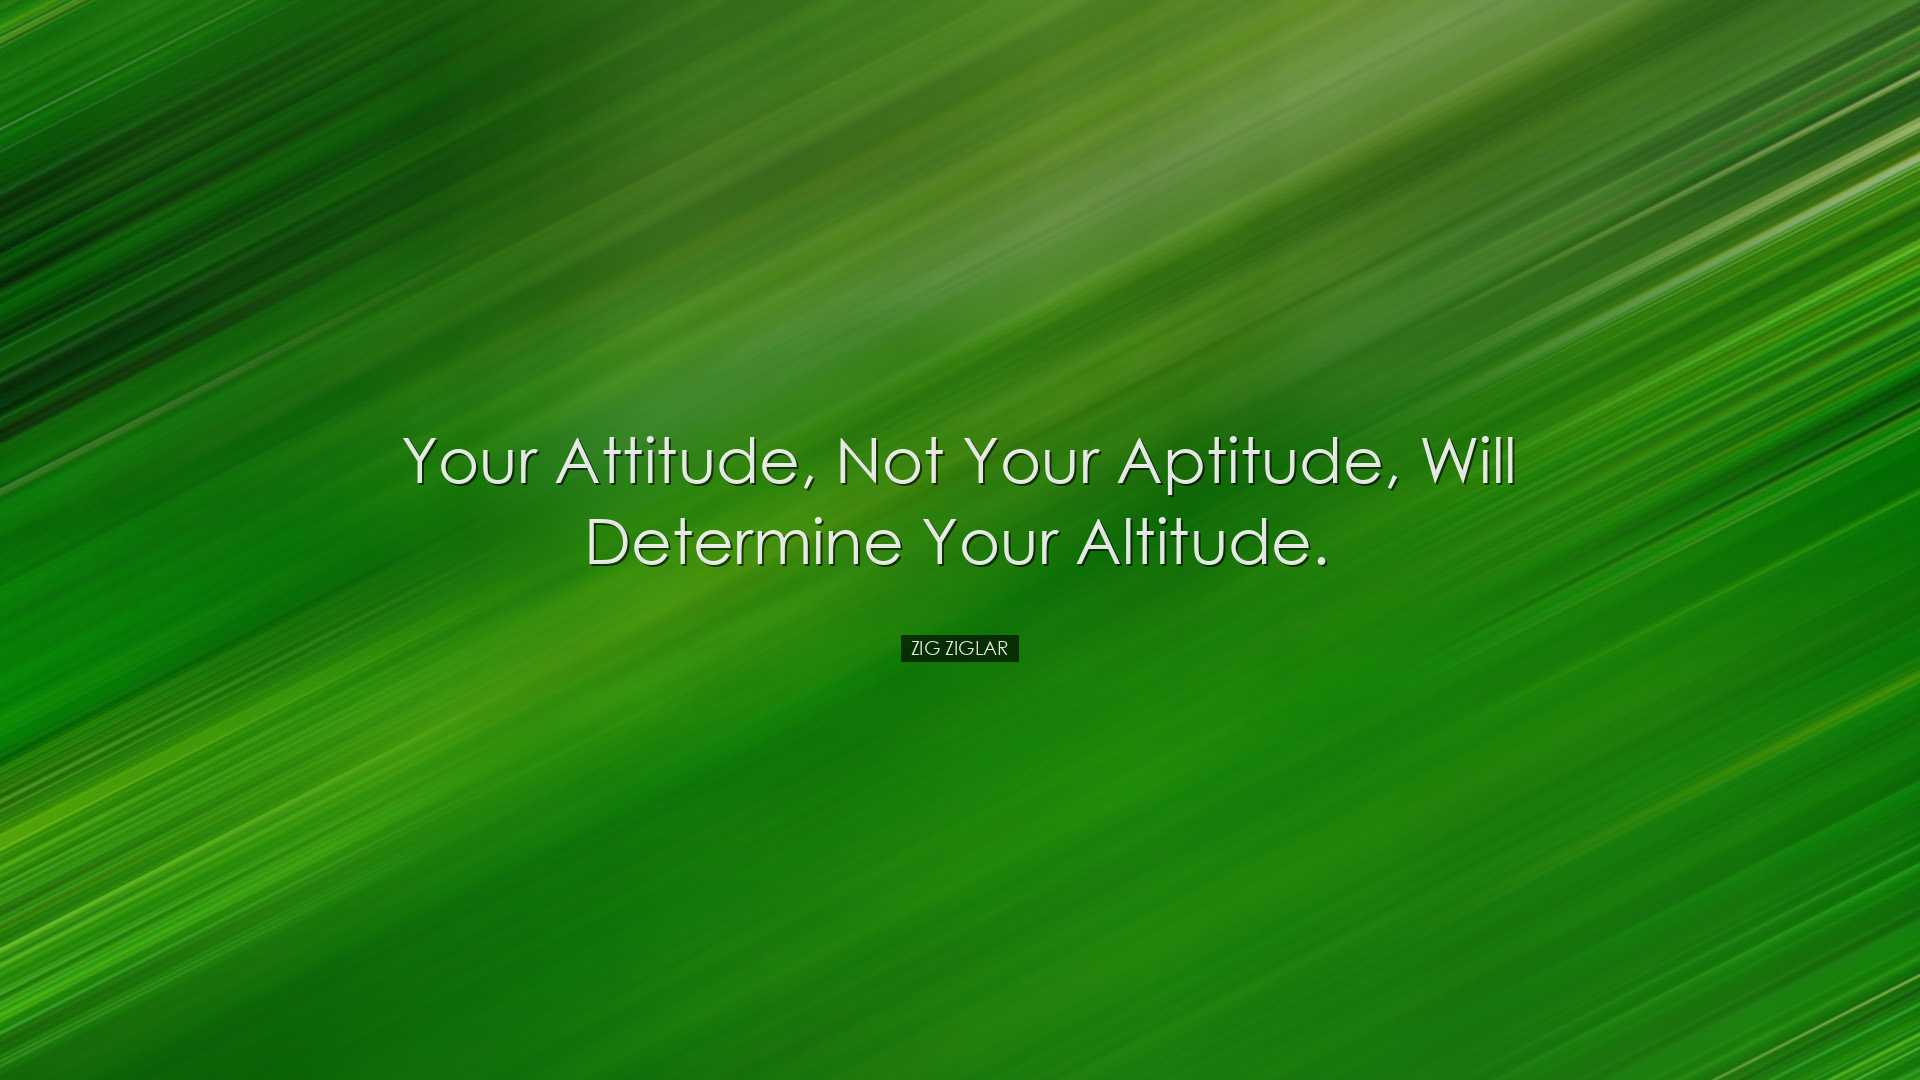 Your attitude, not your aptitude, will determine your altitude. -